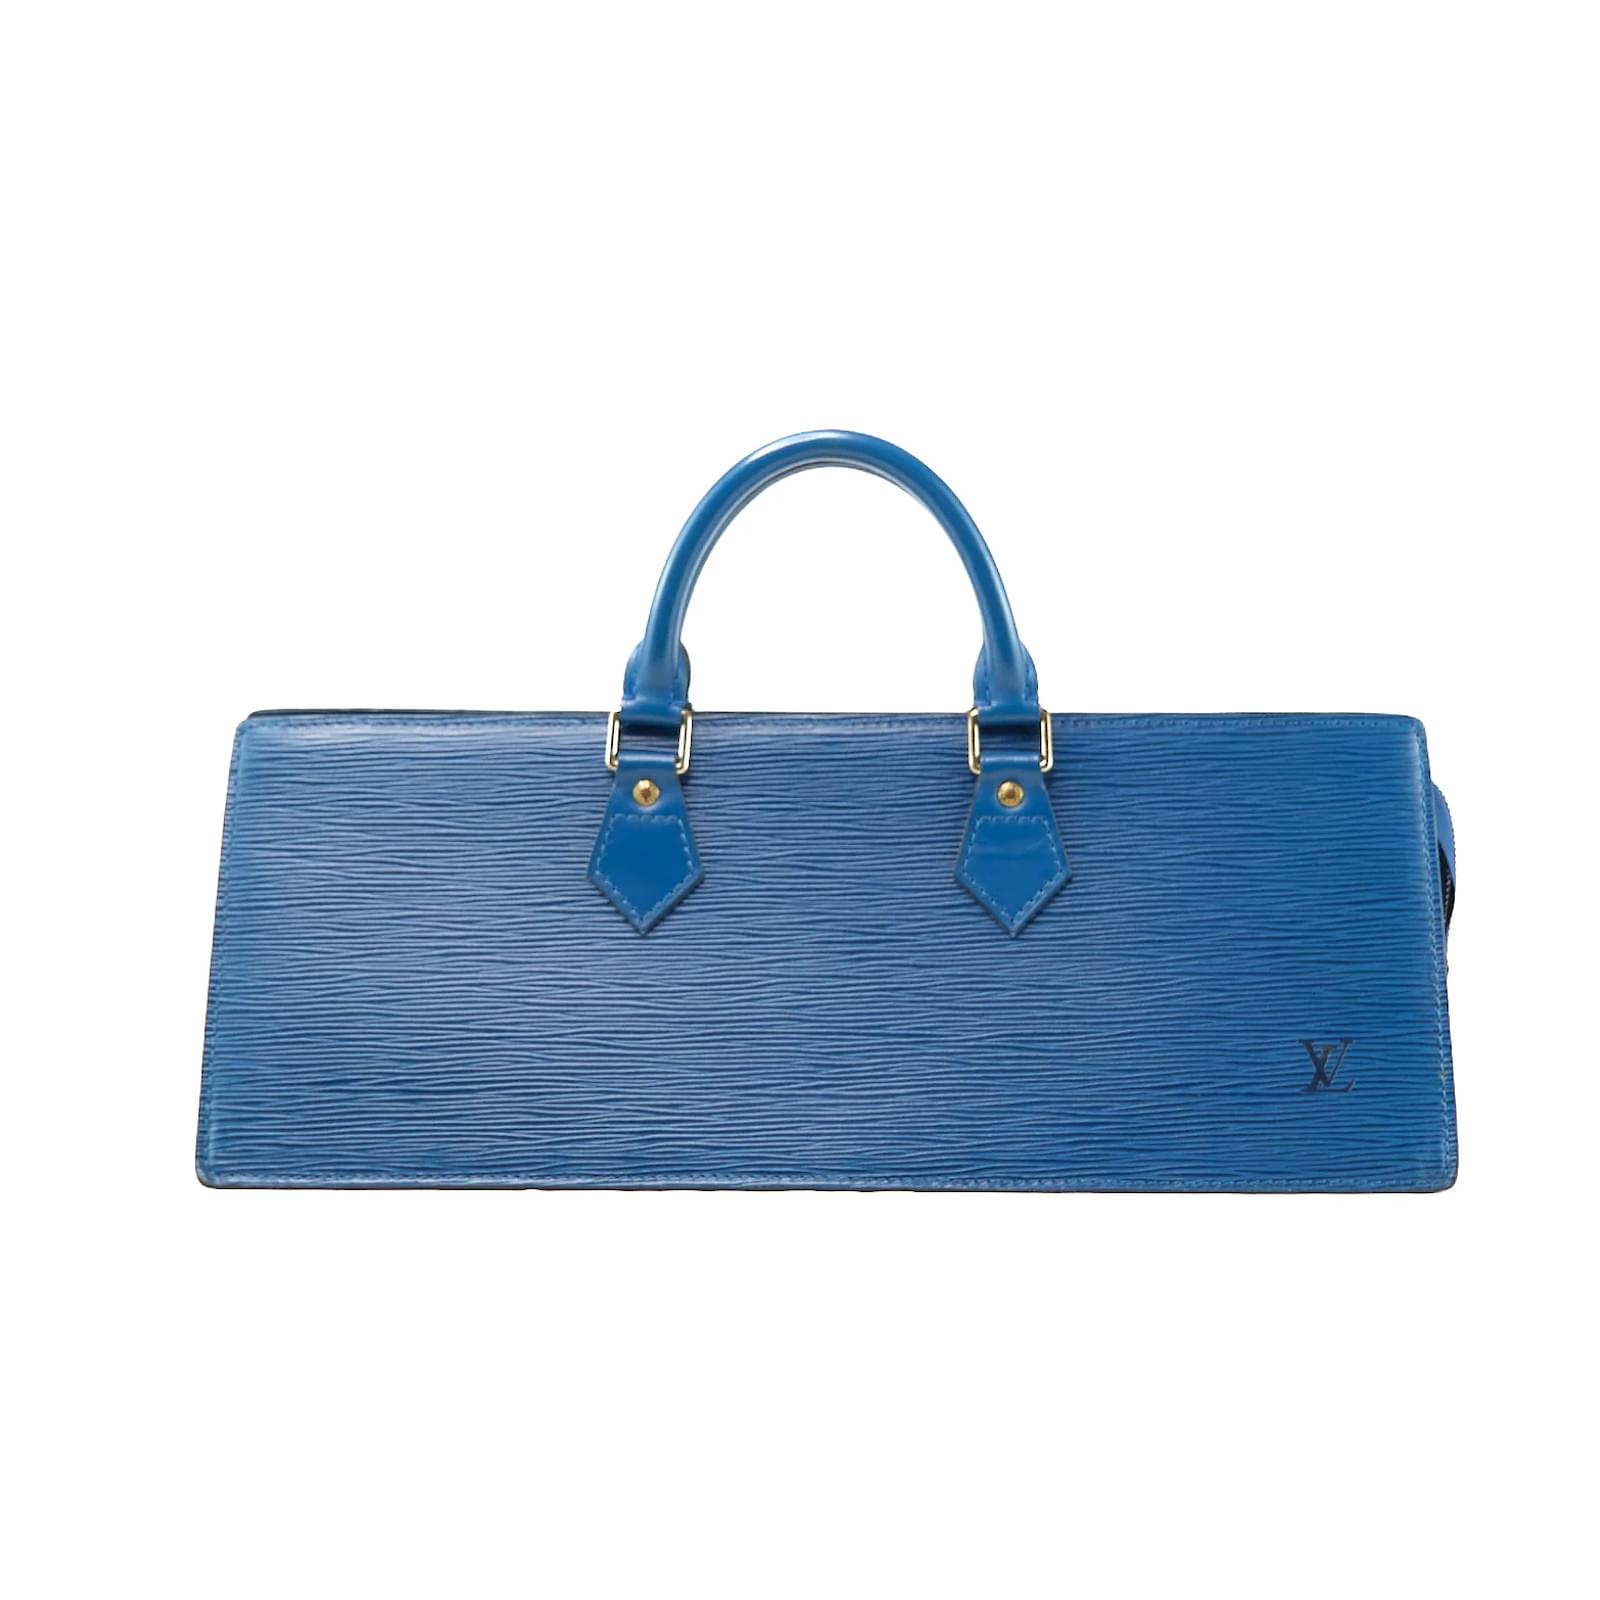 Louis Vuitton Epi Sac Triangle Bag Blue Leather Pony-style